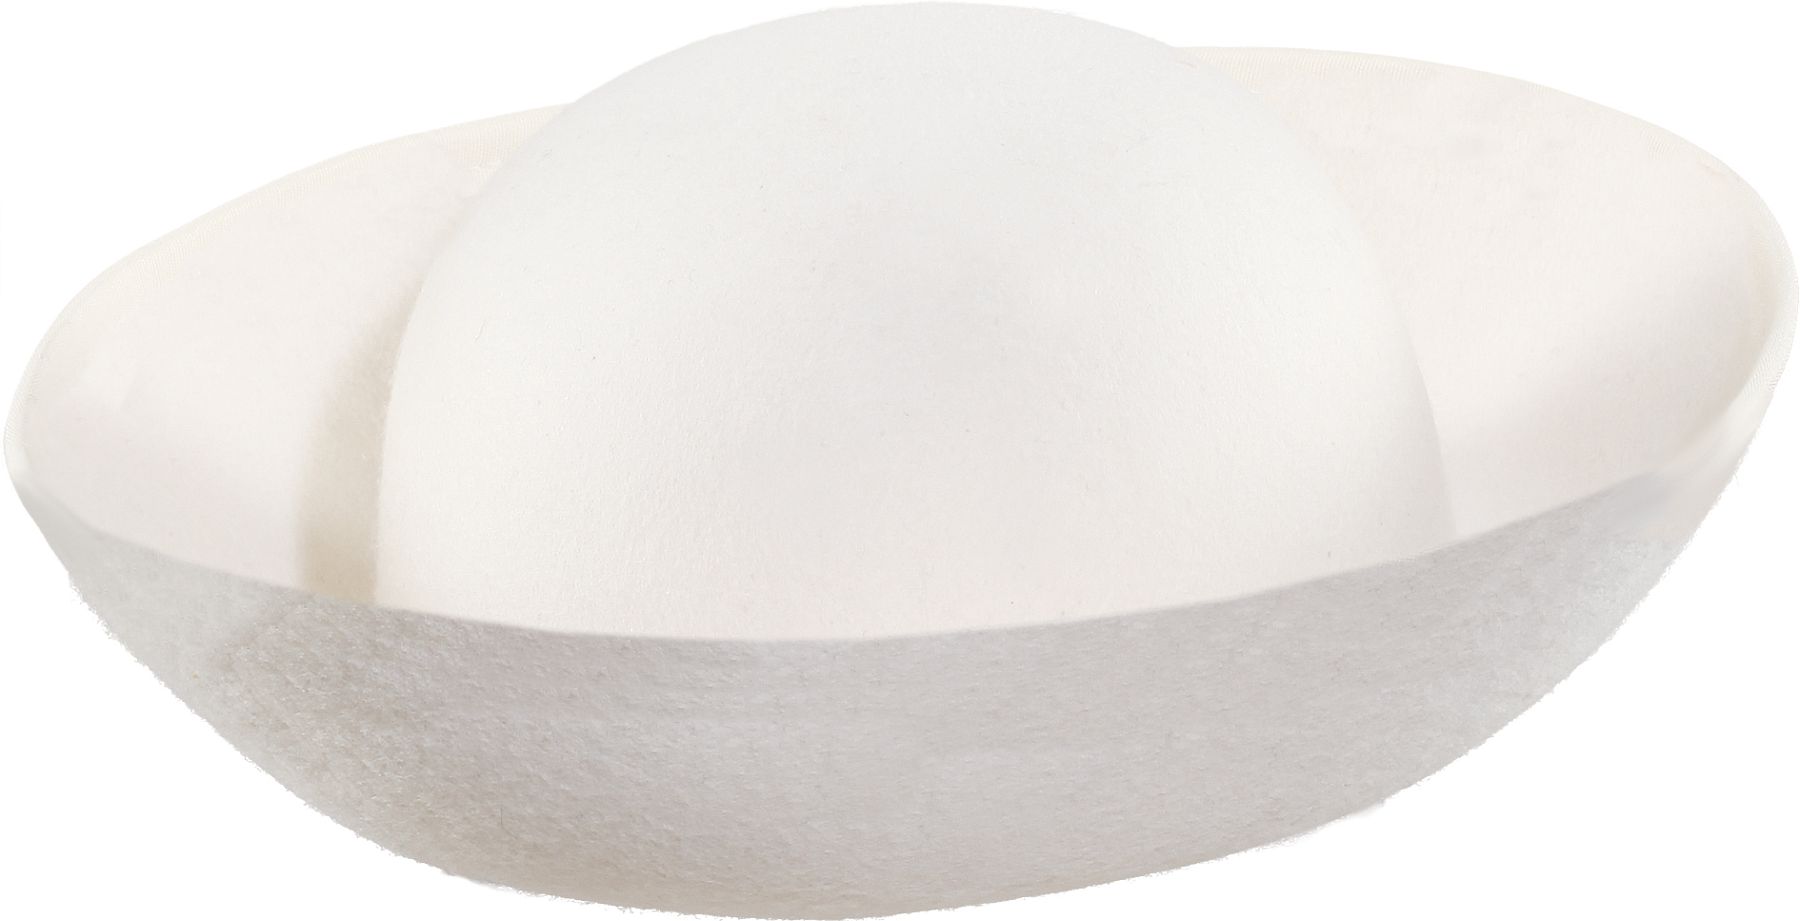 Tricorn hat white, blank